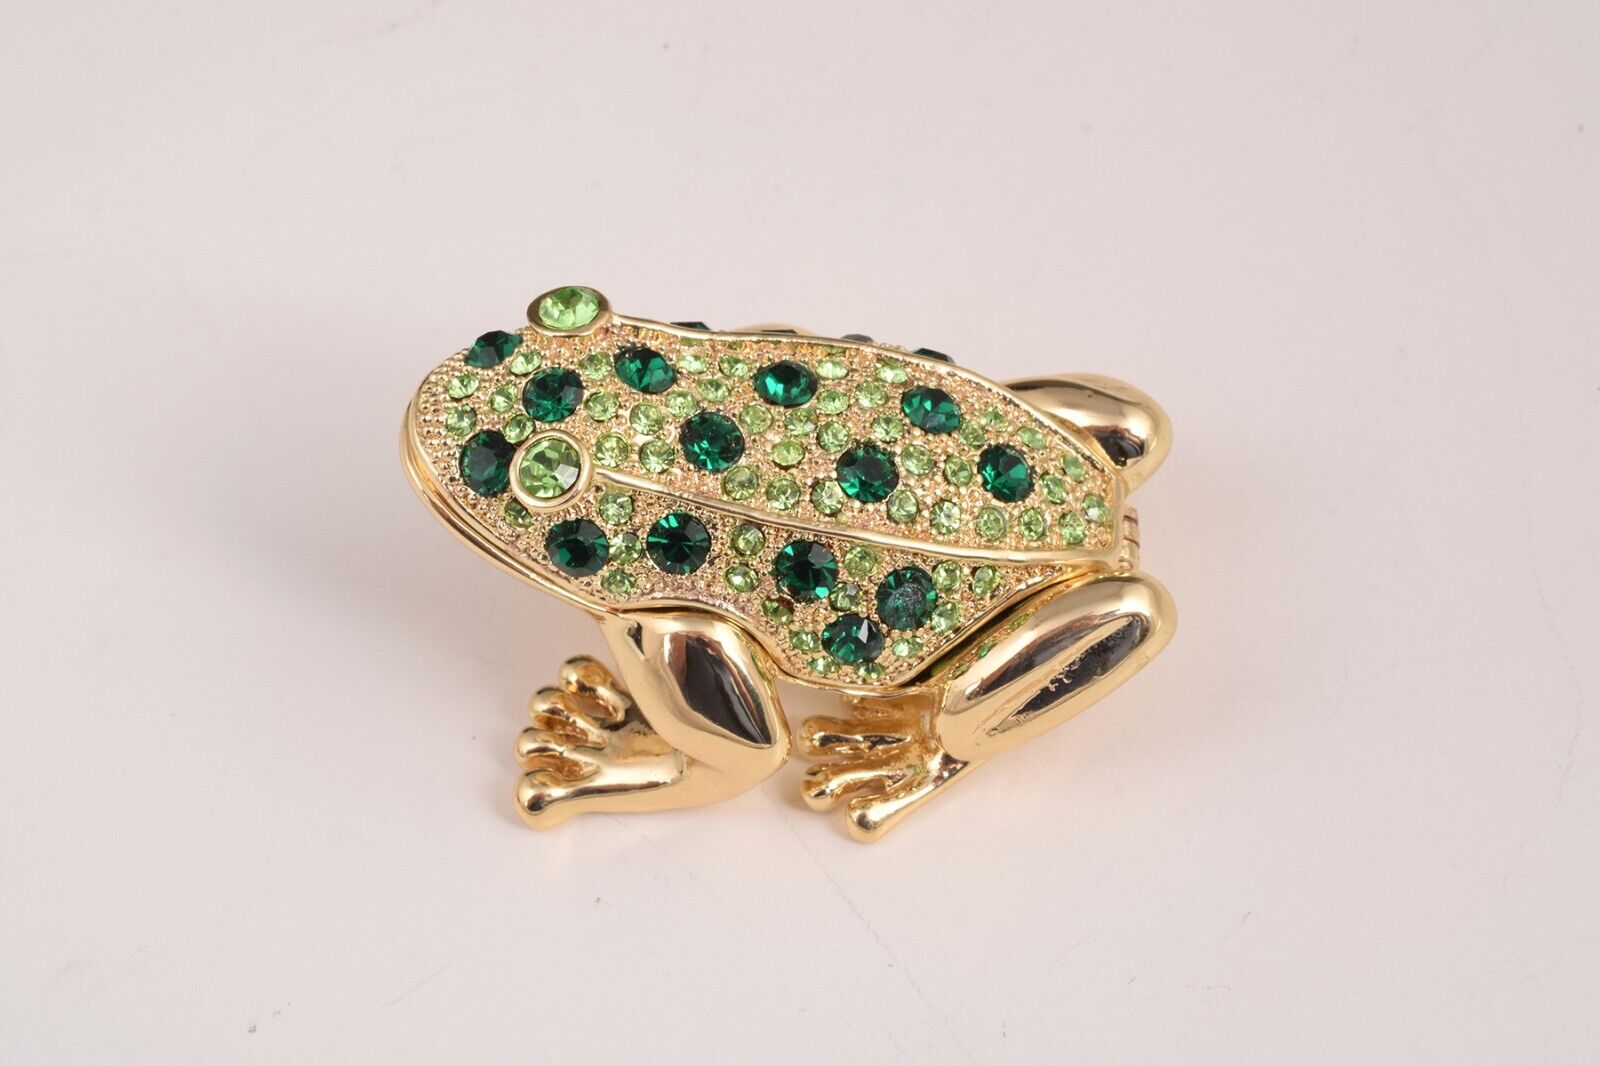 Keren Kopal Golden Green Frog Trinket Box Decorated with Austrian Crystals